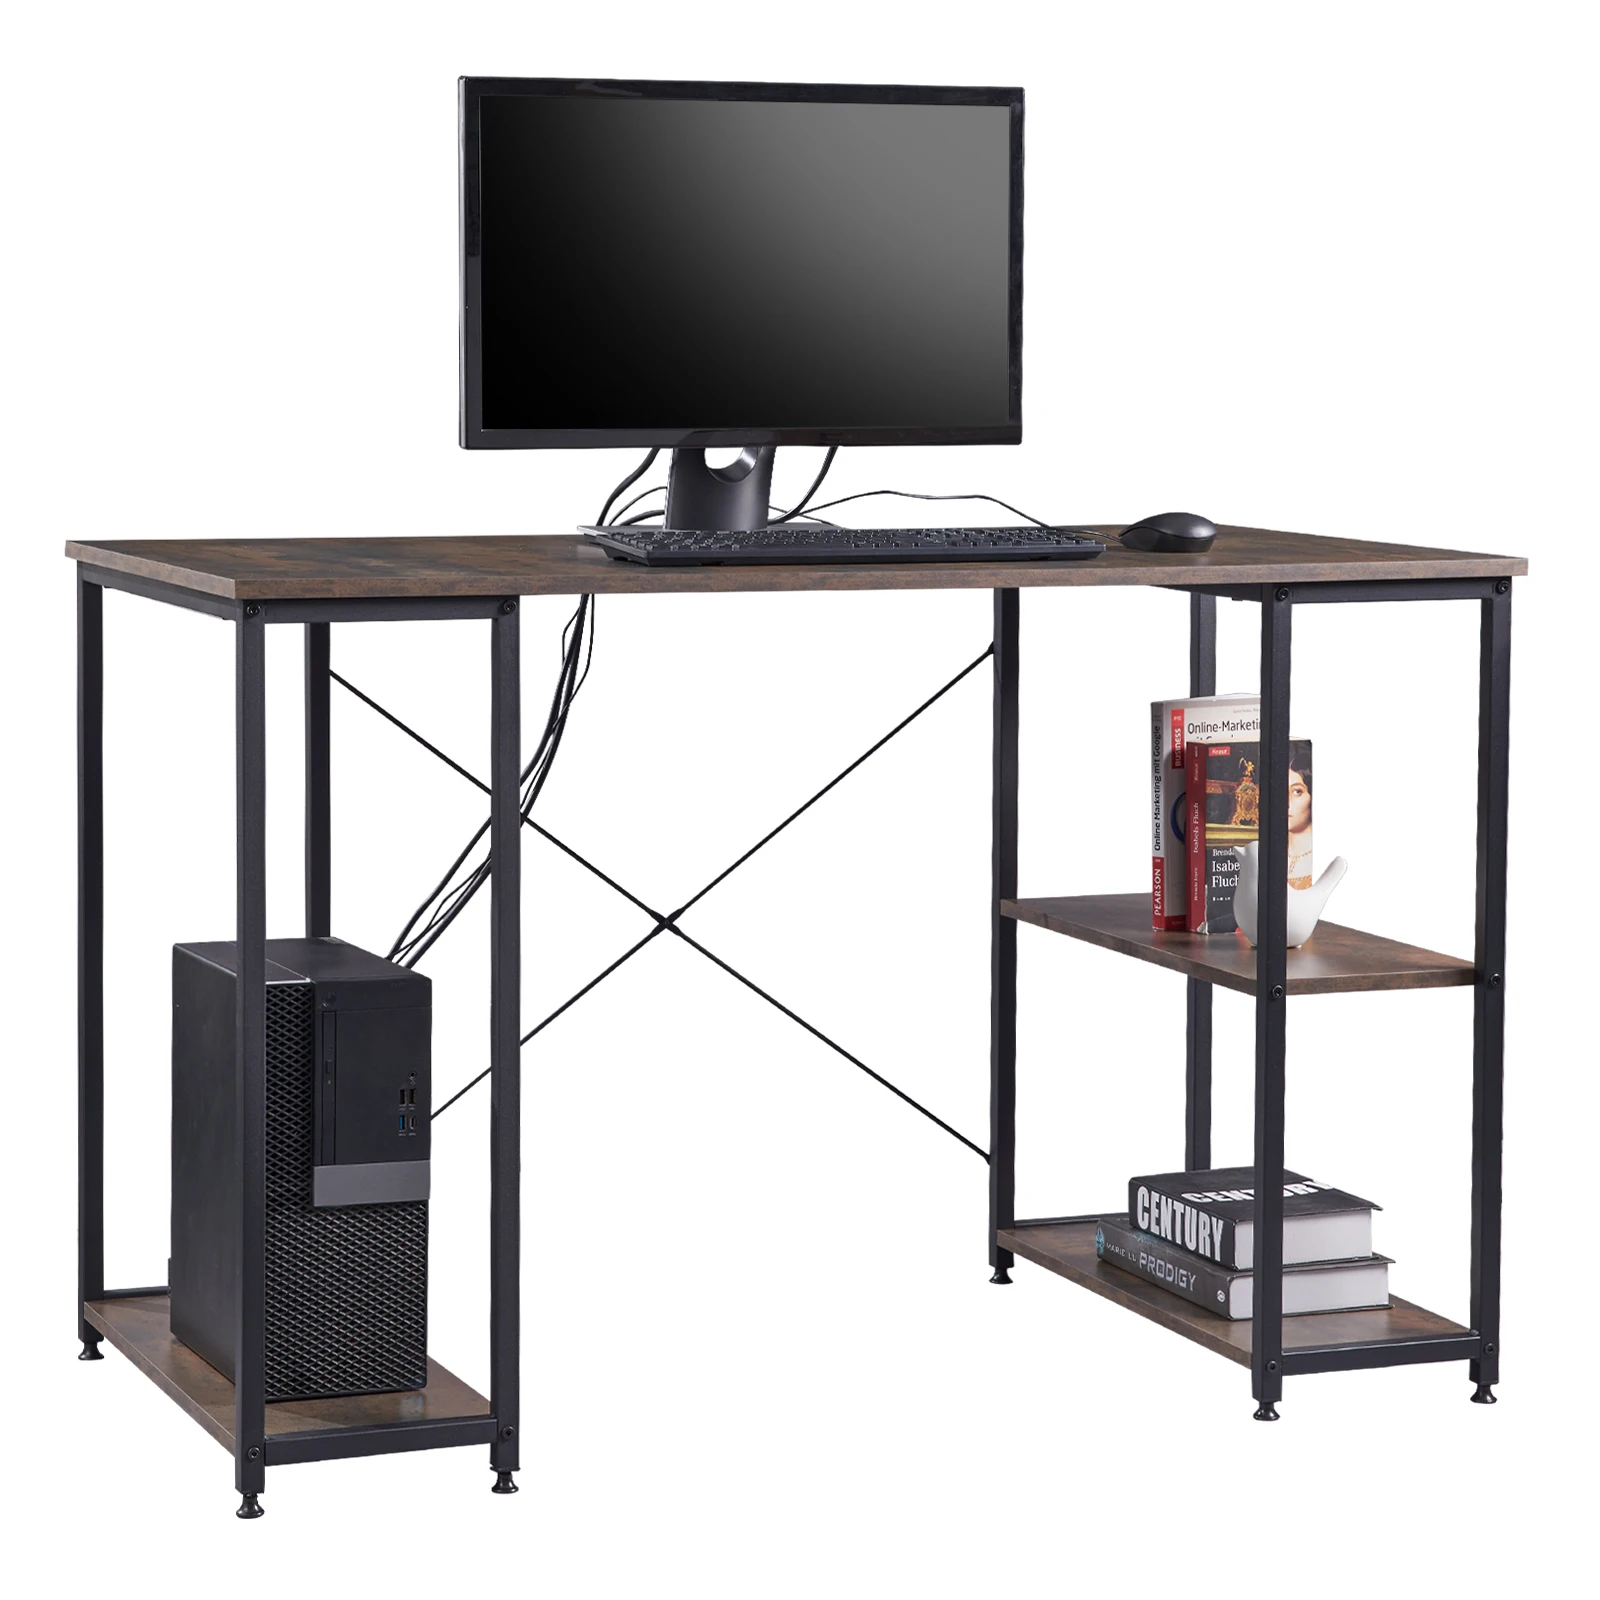 Computer Desk Office Furniture Laptop Desk Wood Steel with Shelves Writing Workstation Study Table Decor